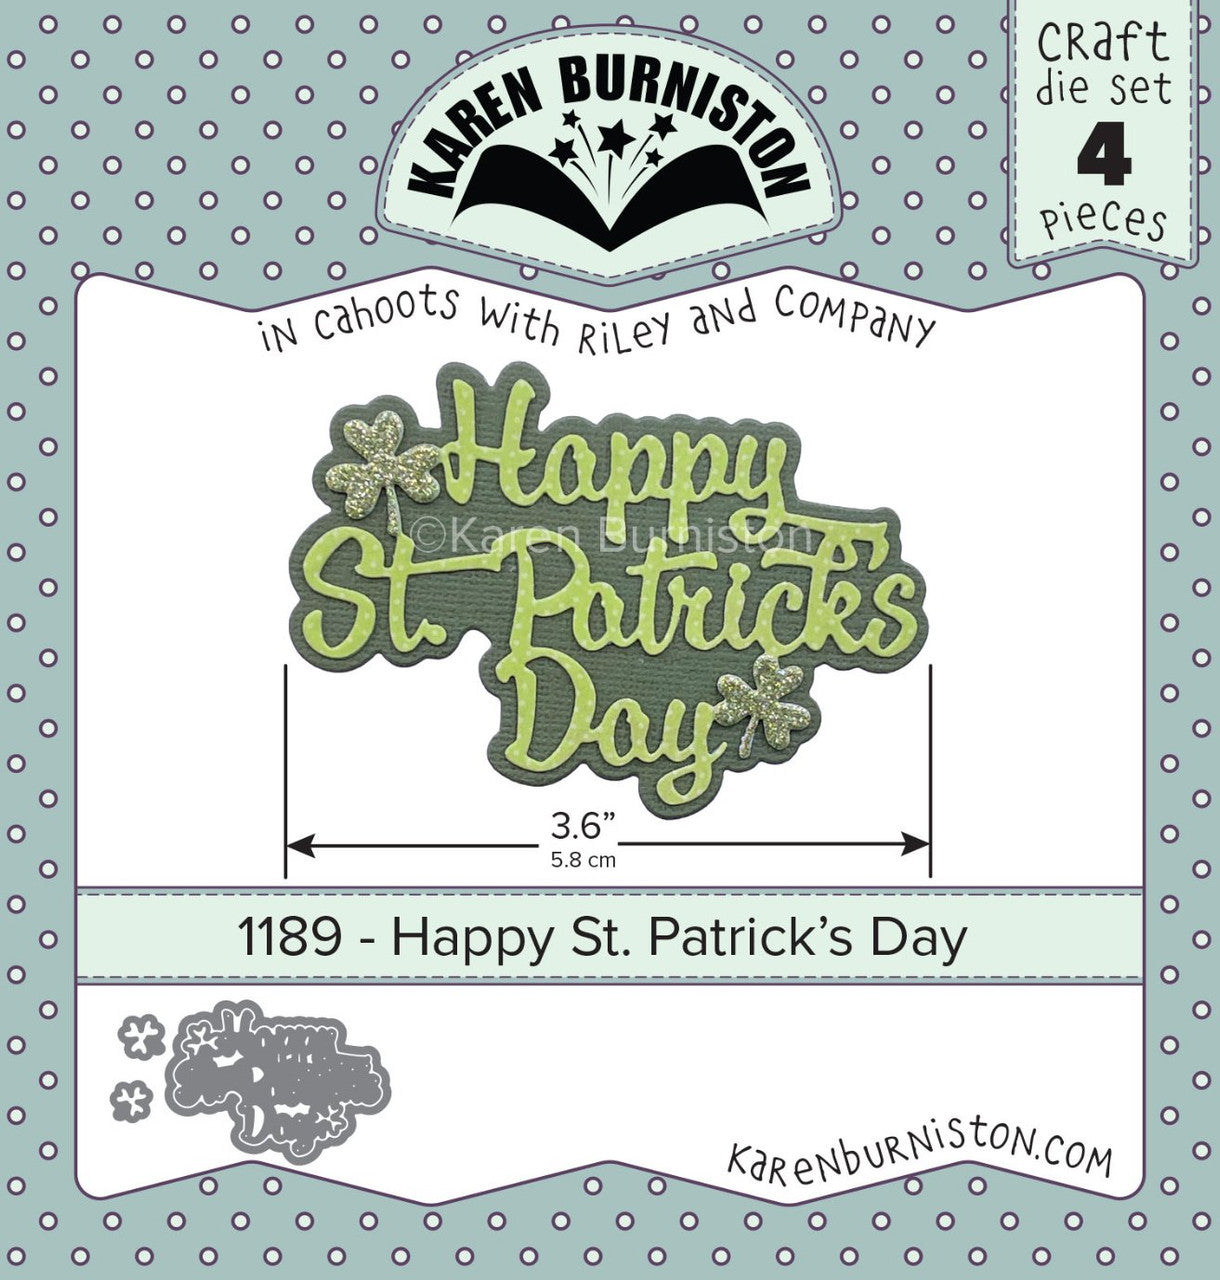 1189 Karen Burniston - Happy St. Patrick's Day